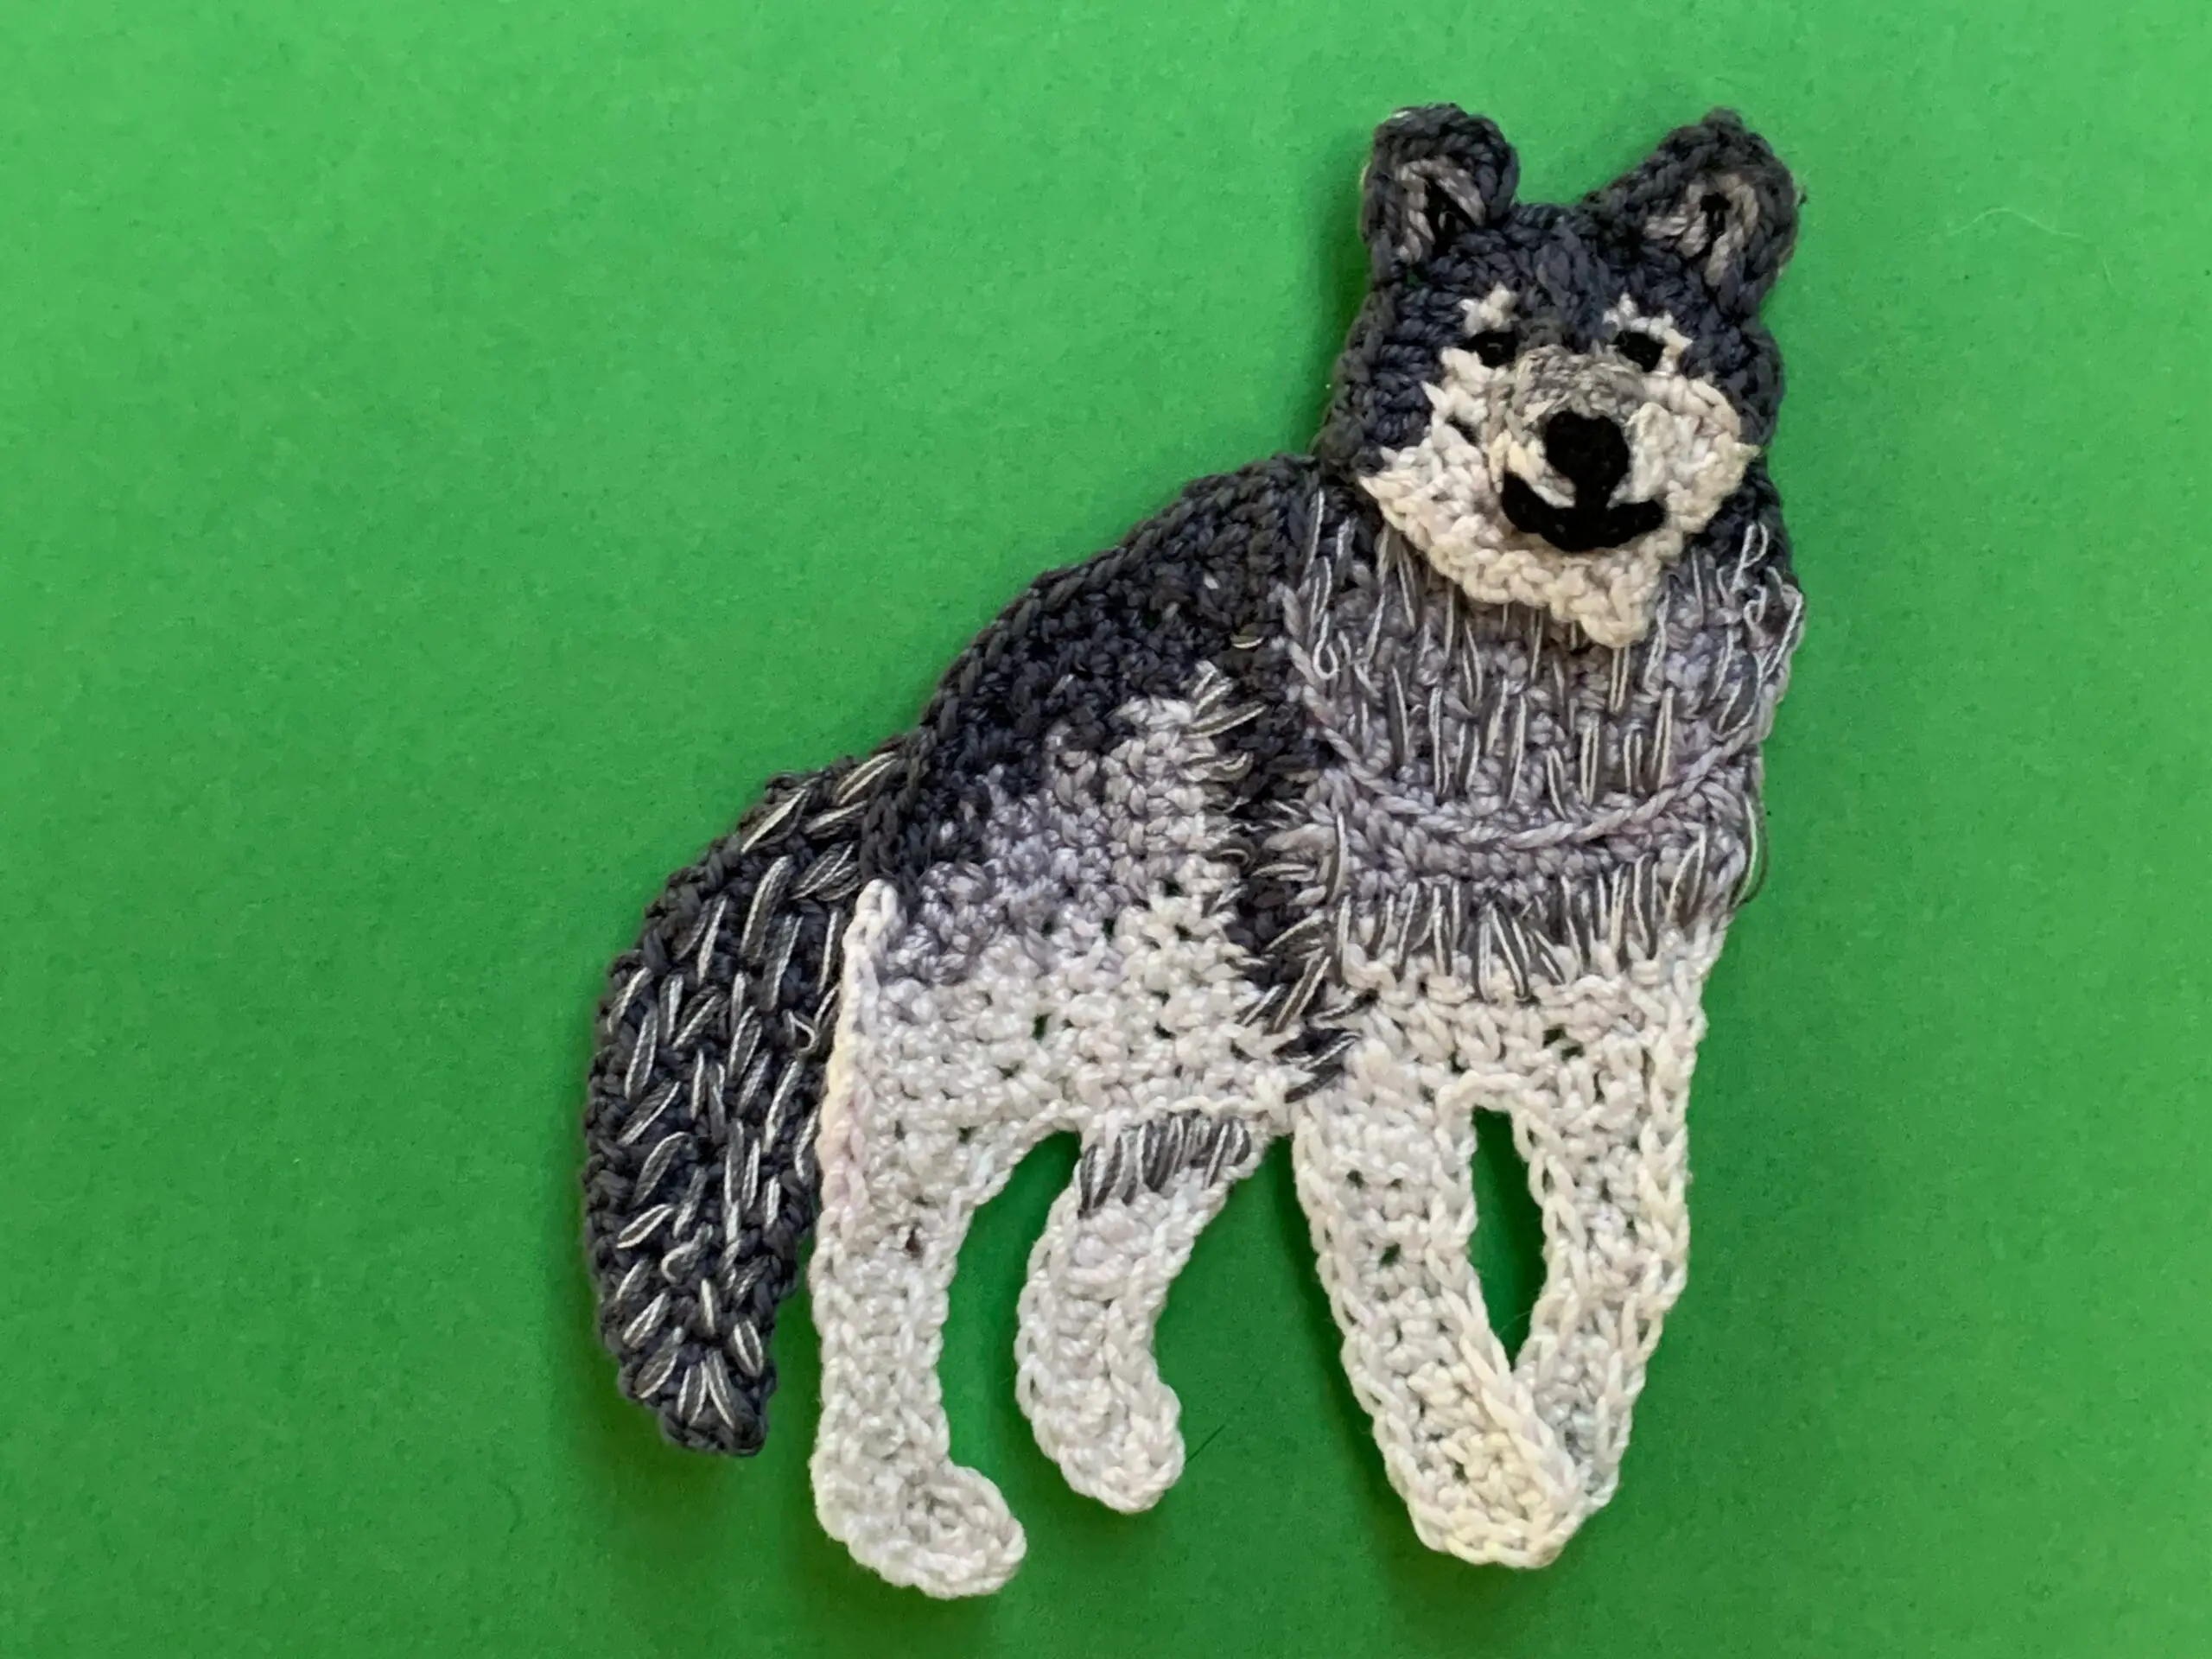 Finished crochet wolf 2 ply landscape